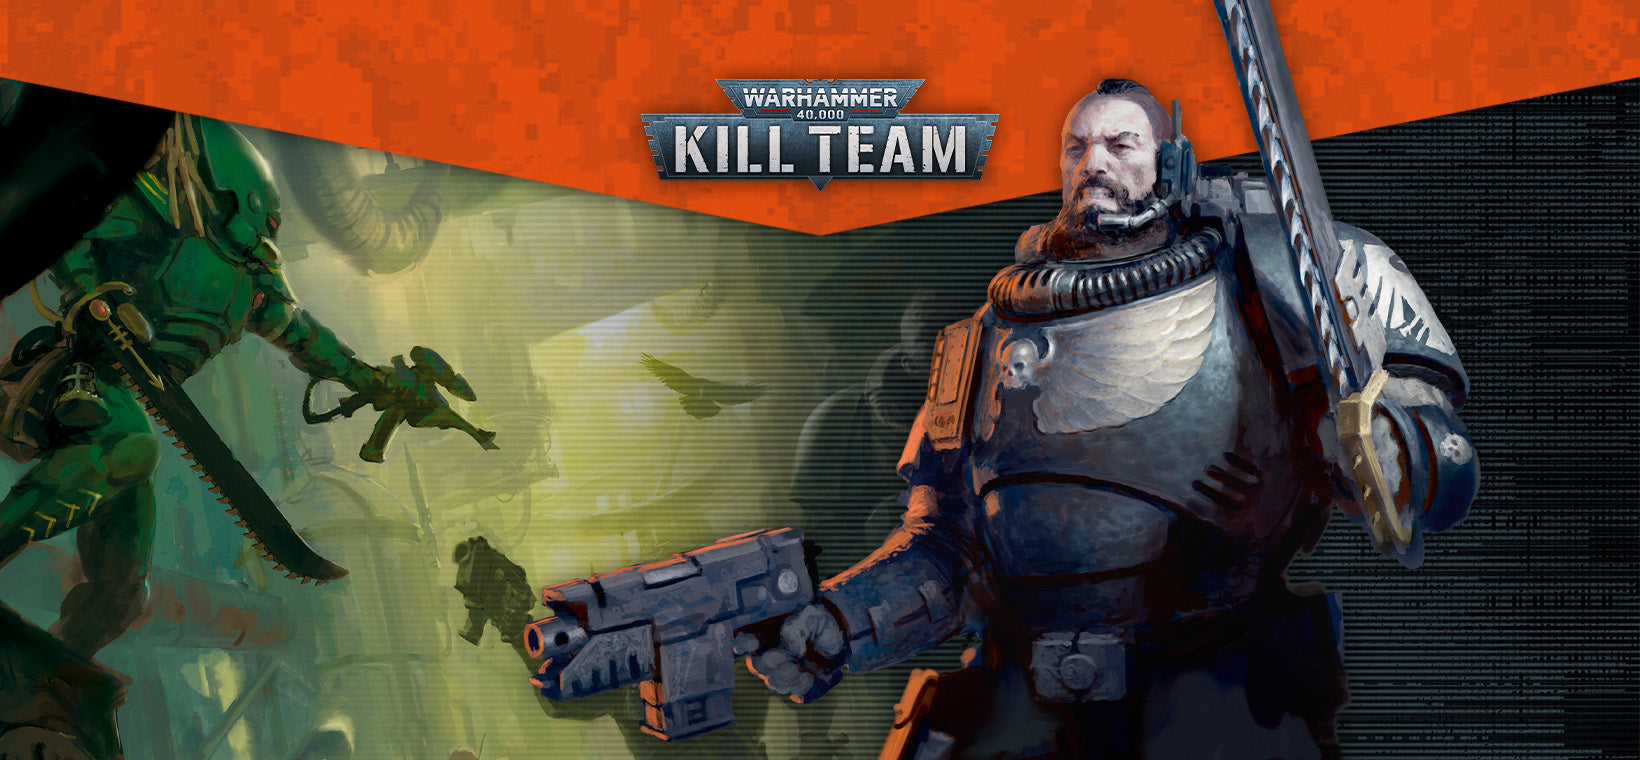 Warhammer 40,000: Kill Team - Skirmish Combat in the 41st Millennium